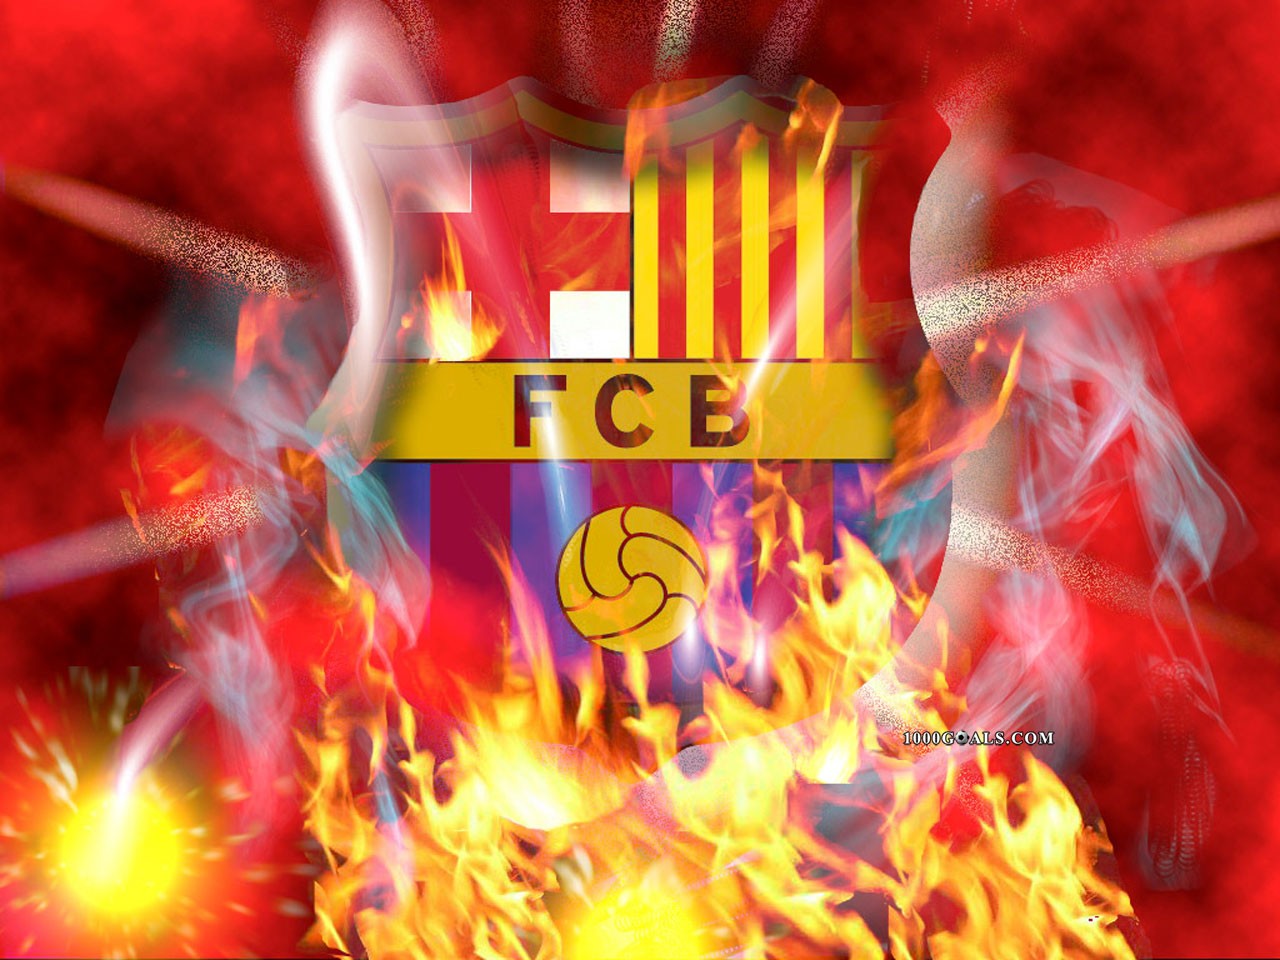 Image For Great Fc Barcelona Logo Wallpaper 2014 Shf8 - HD Wallpaper 